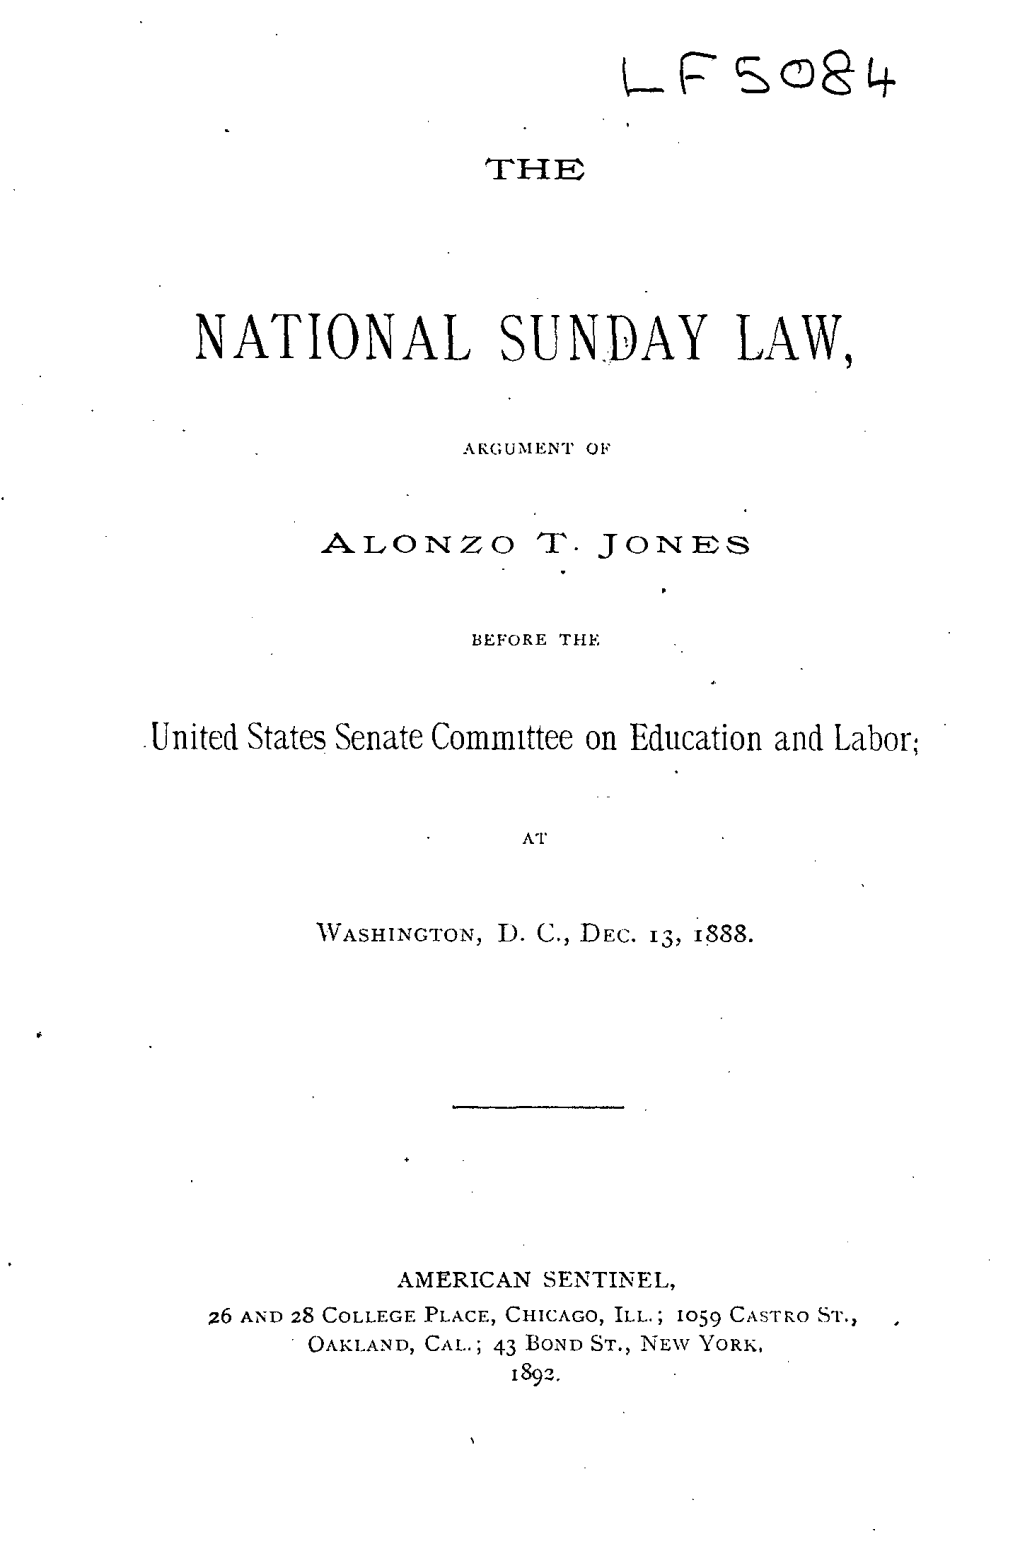 National Sunday Law